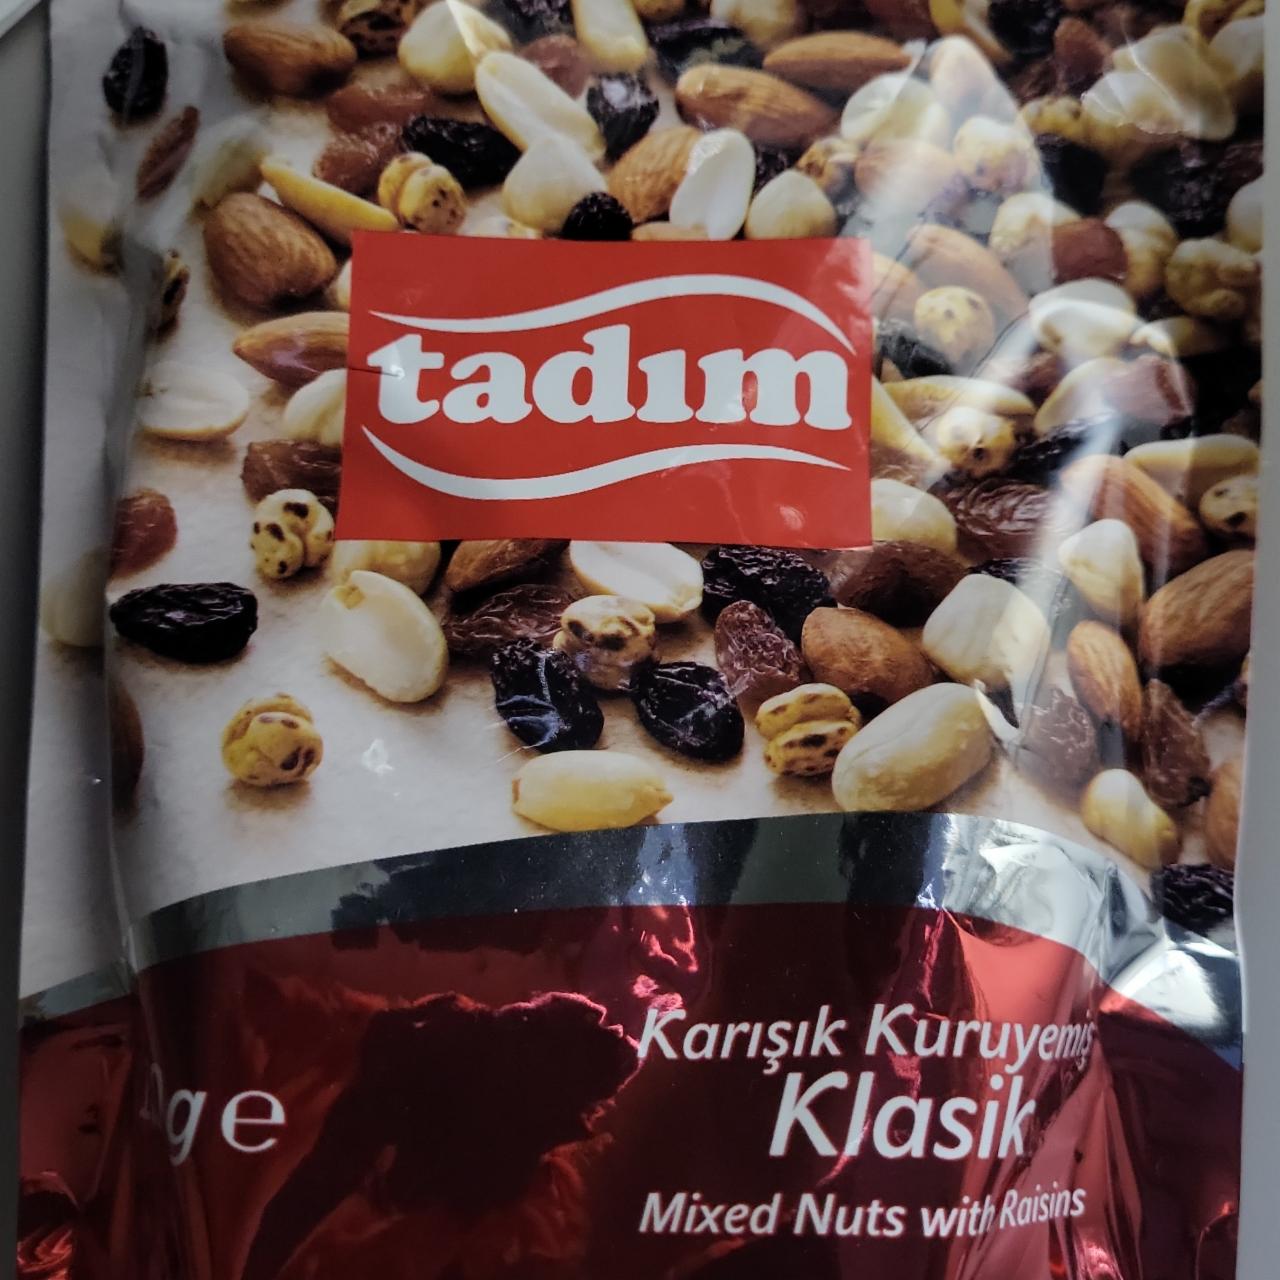 Fotografie - Klasik Mixed Nuts with Raisins Tadim